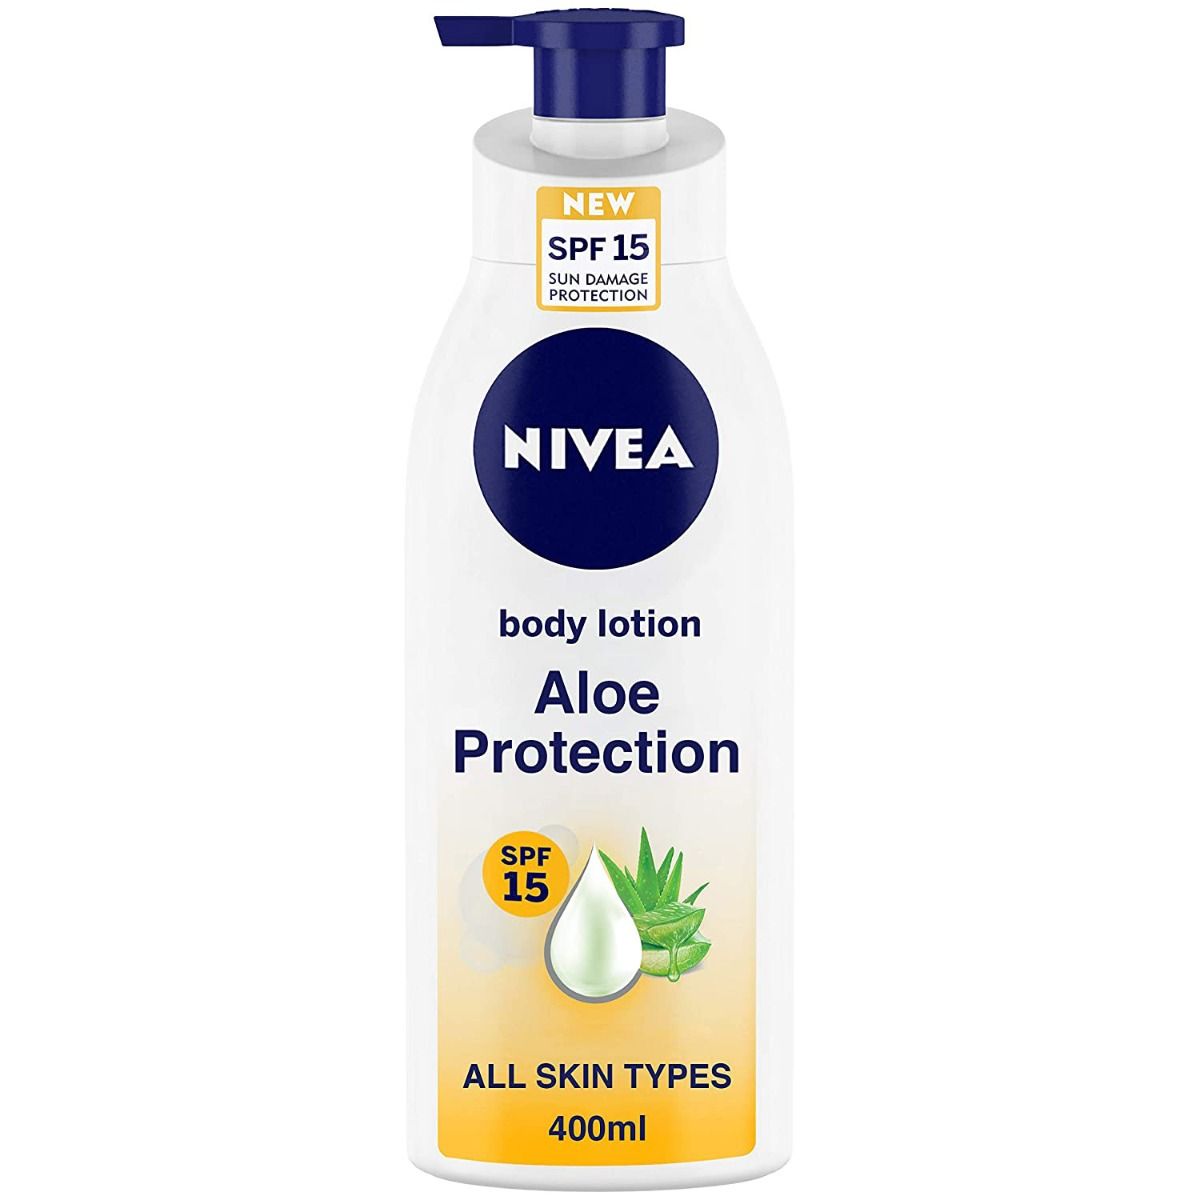 Buy Nivea Aloe Protection SPF 15 Body Lotion, 400 ml Online